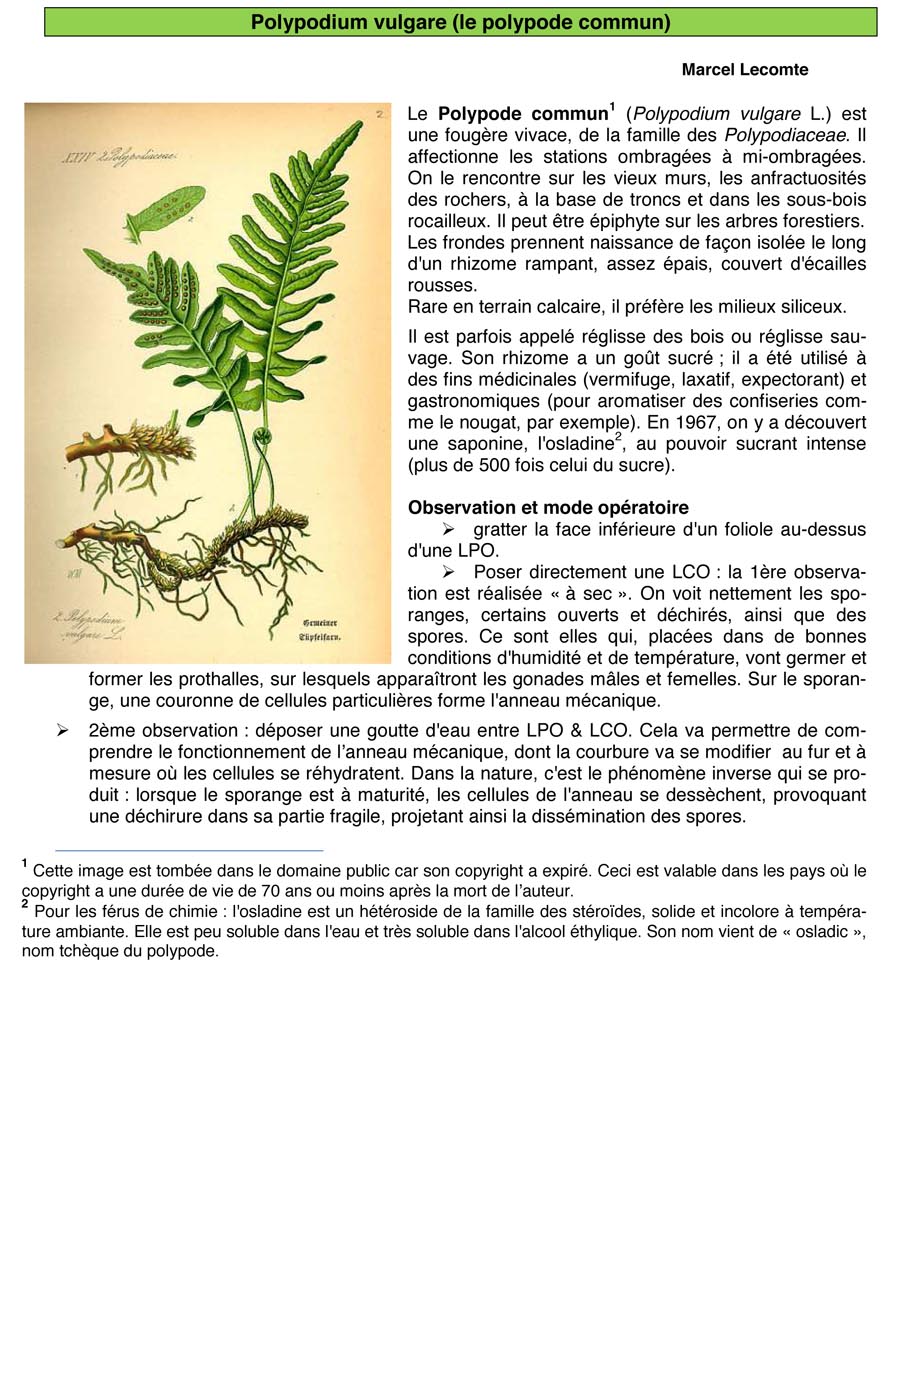 Polypodium vulgare (polypode vulgaire)